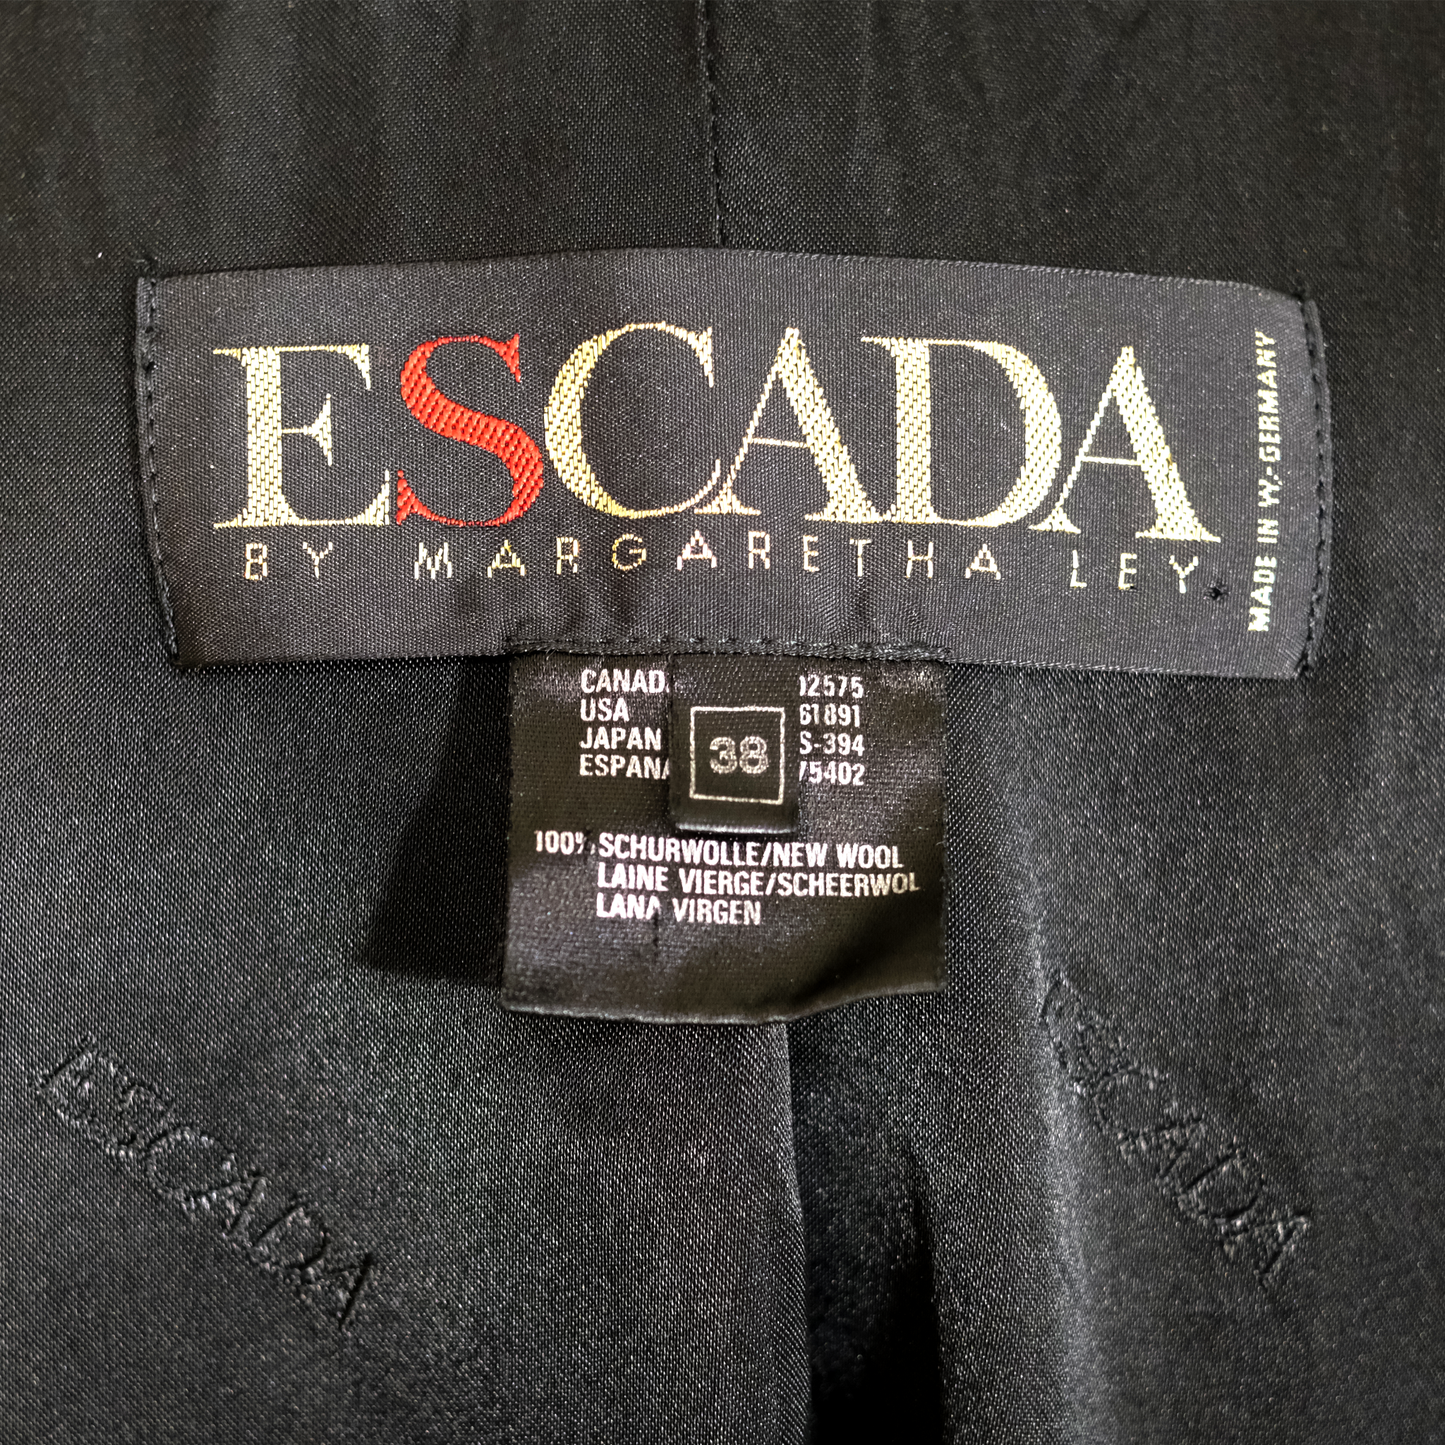 Vintage Escada Blazer - Size 38 or MD